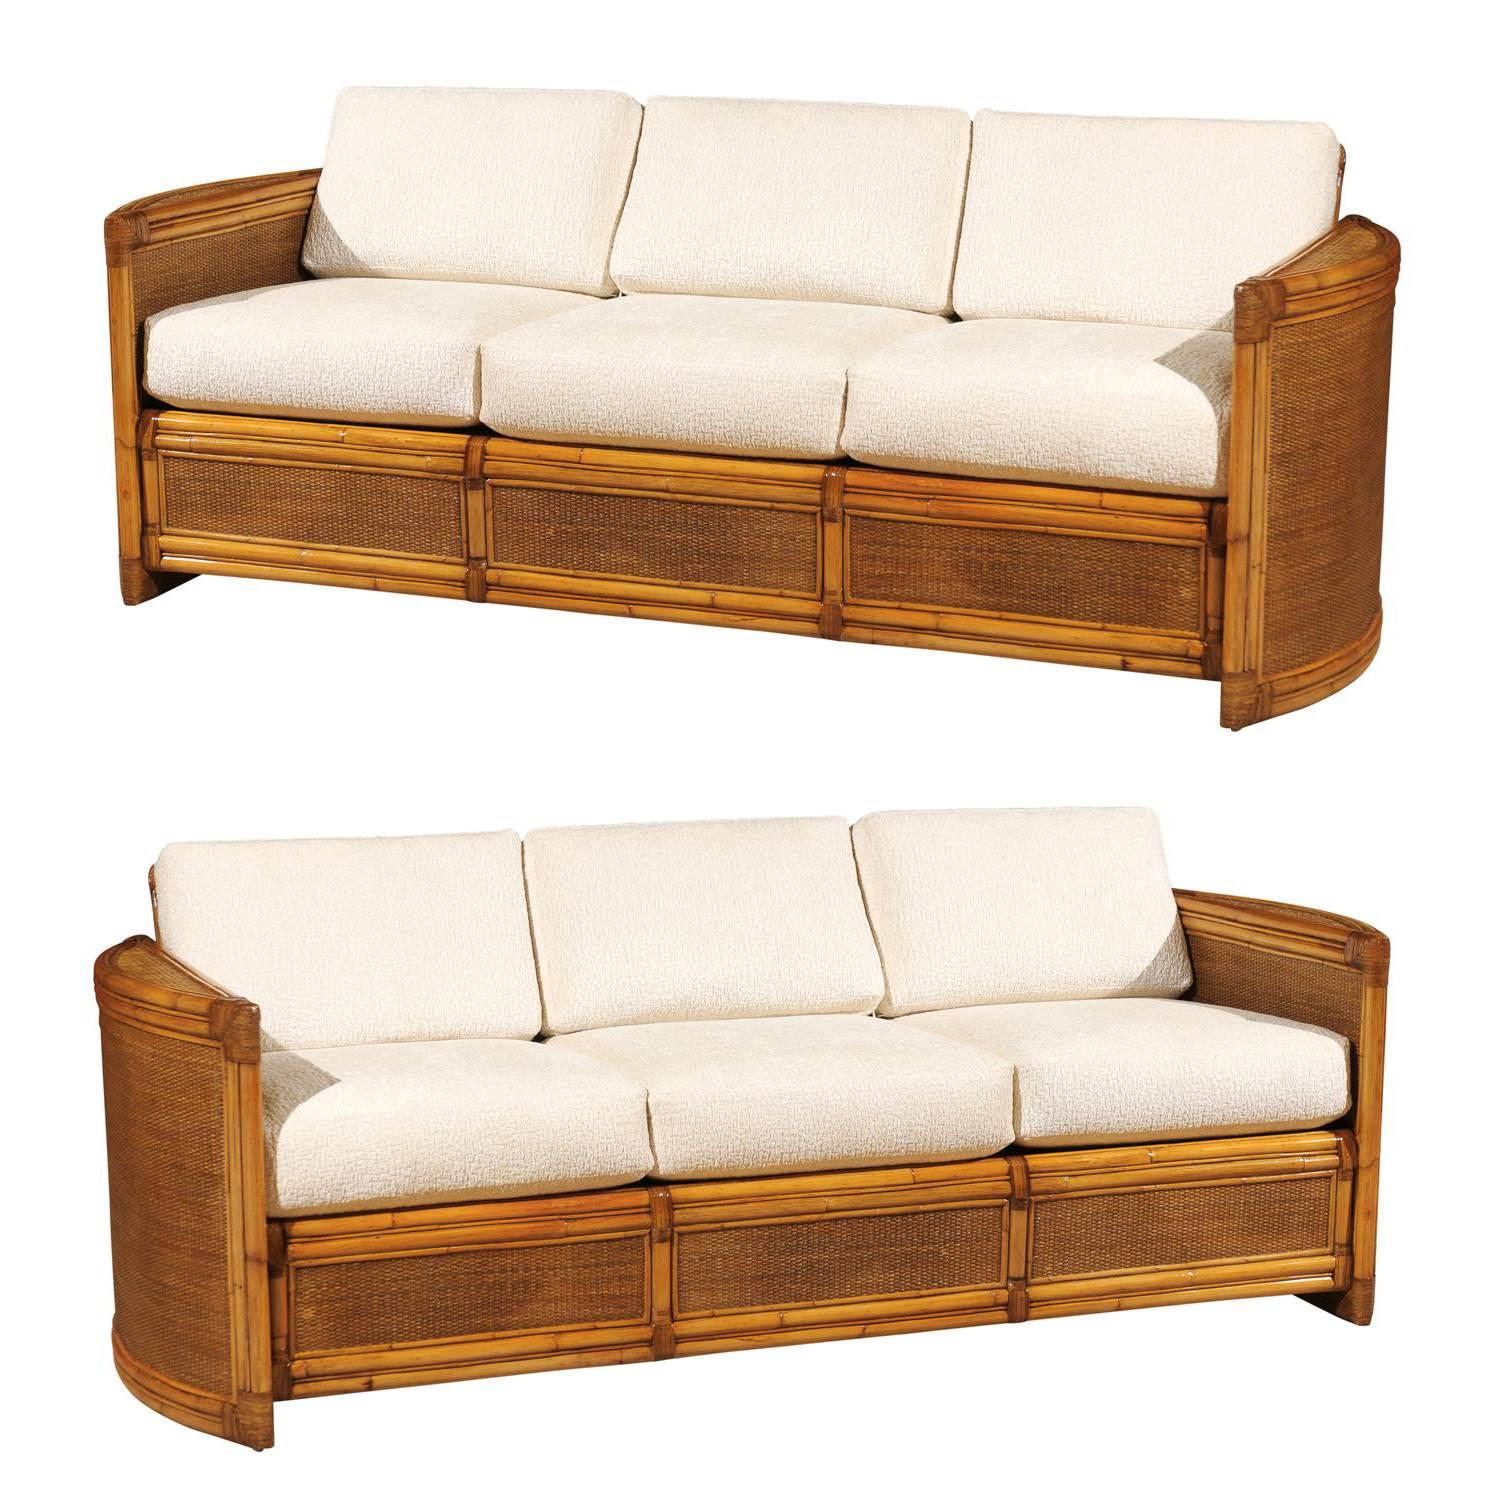 Exceptional Restored Vintage Rattan Sofa